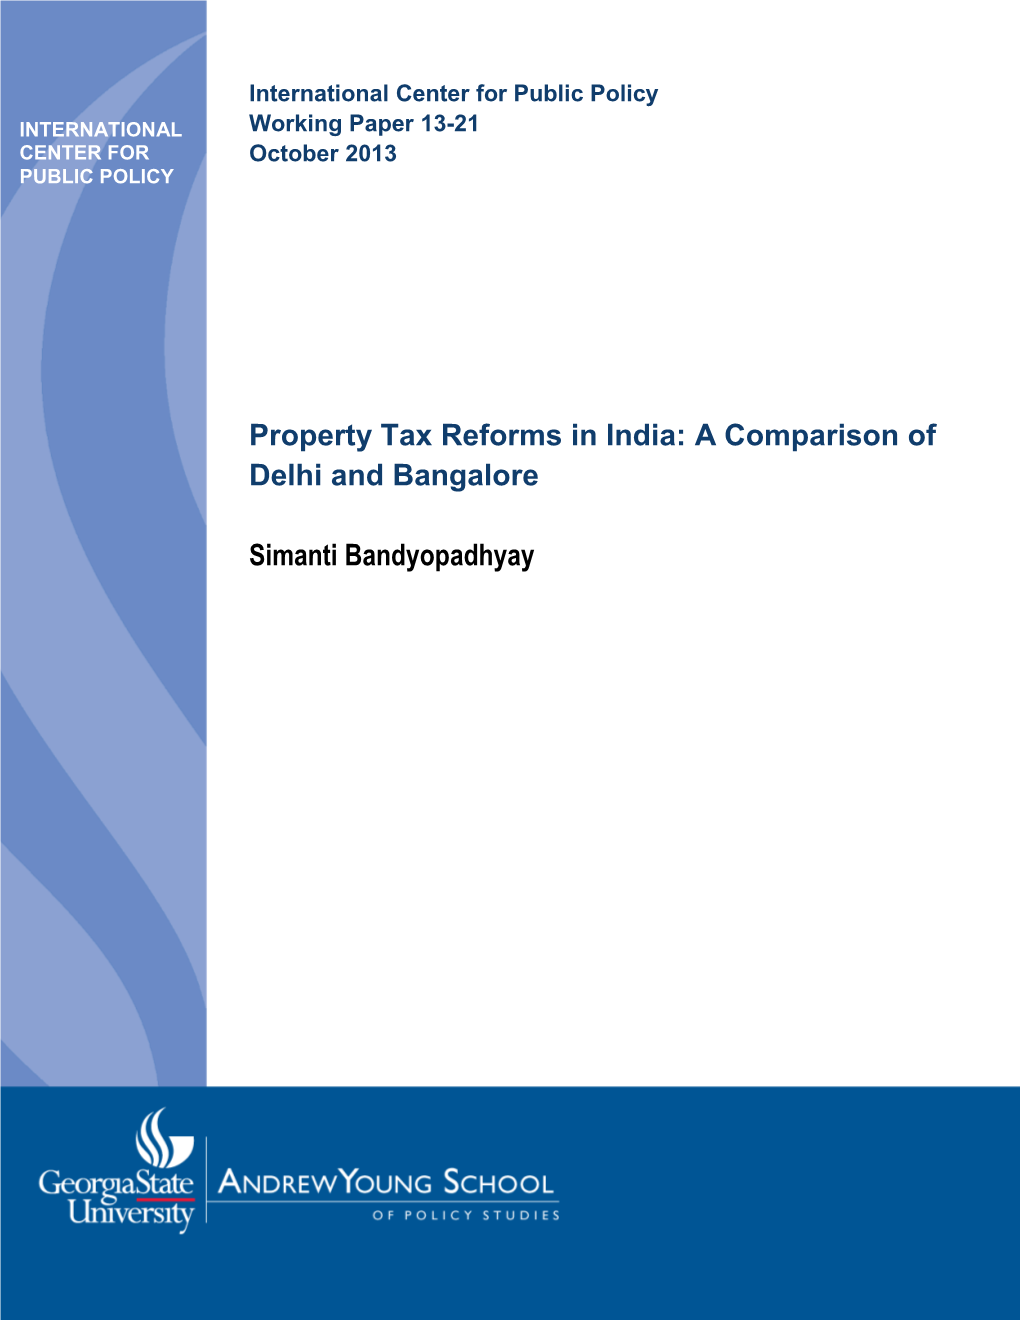 Property Tax Reforms in India: a Comparison of Delhi and Bangalore